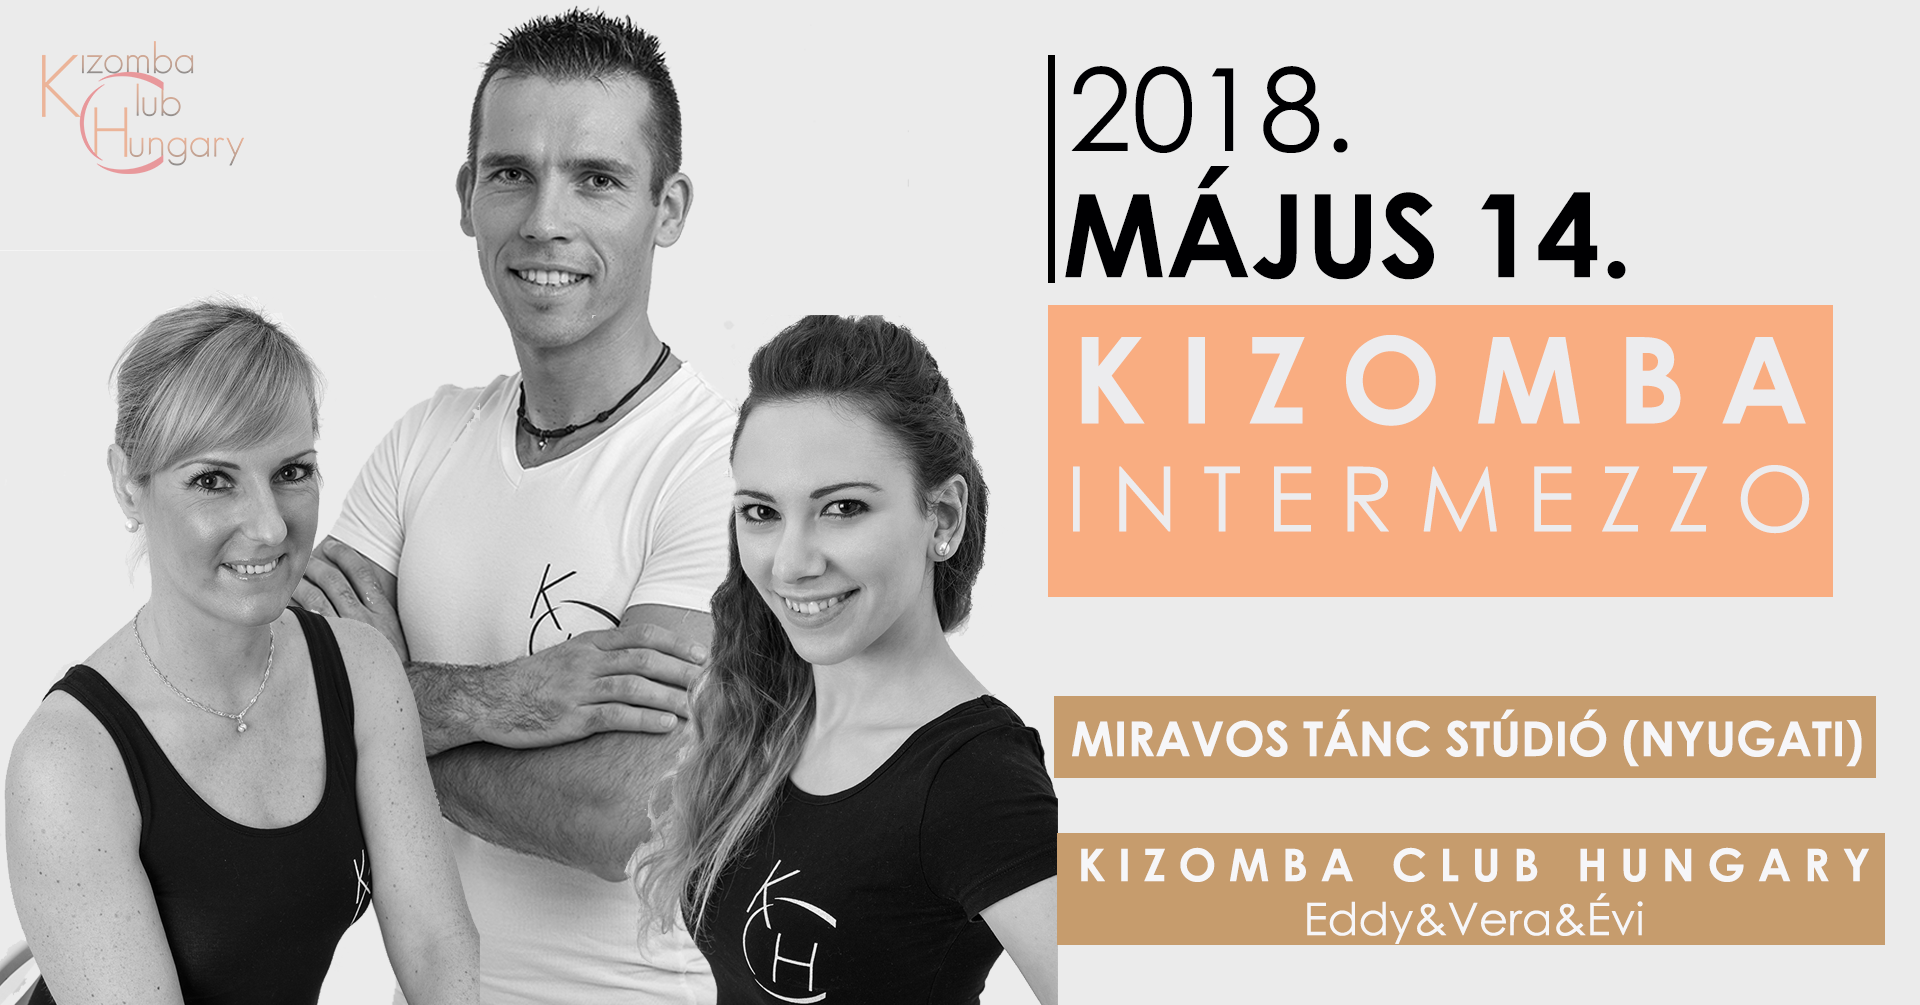 Kizomba Intermezzo (HÉTFŐ 20.30-22.00) Mirávos